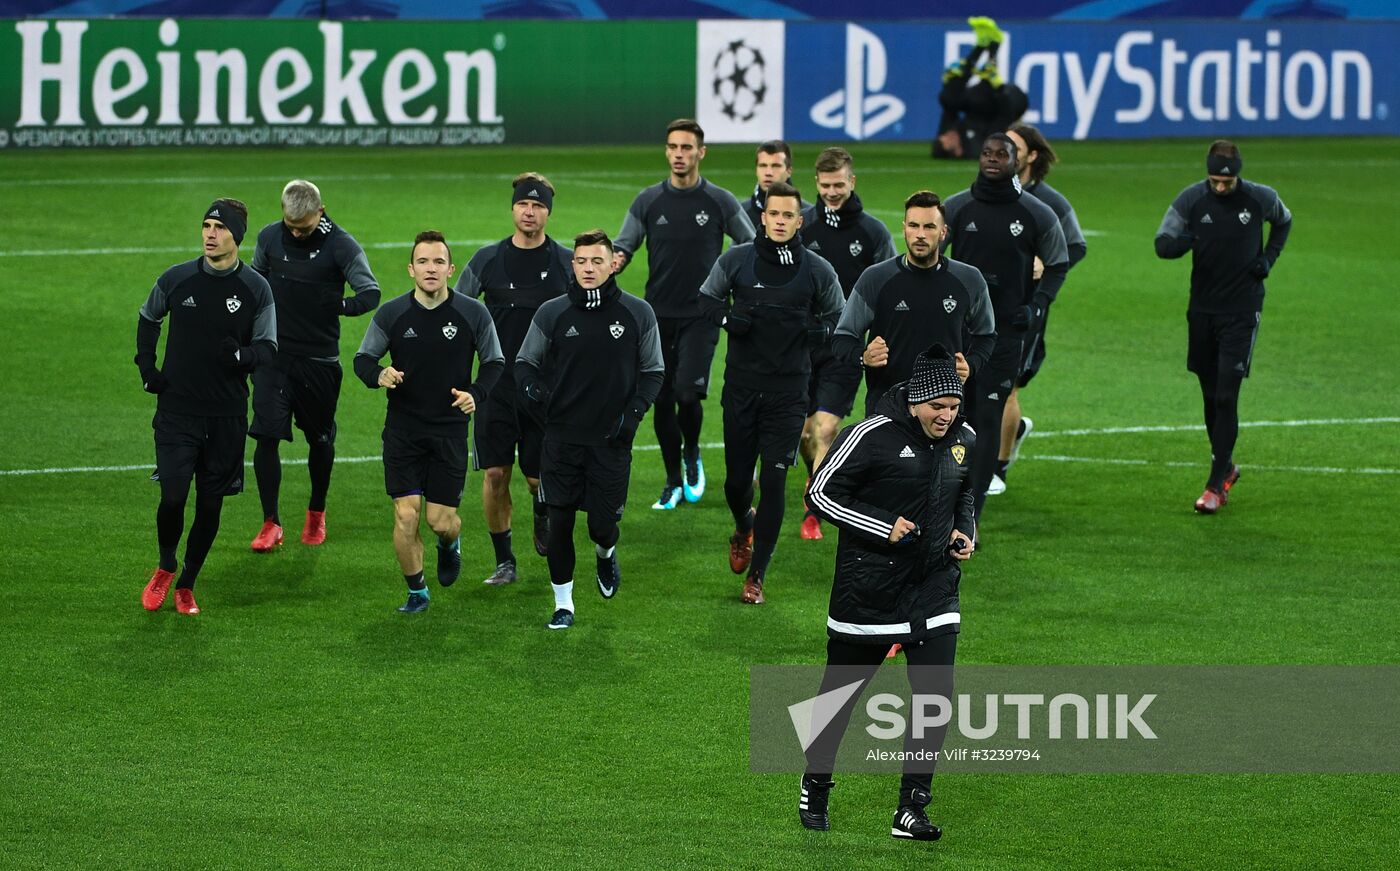 Football. Champions League. Maribor's training session